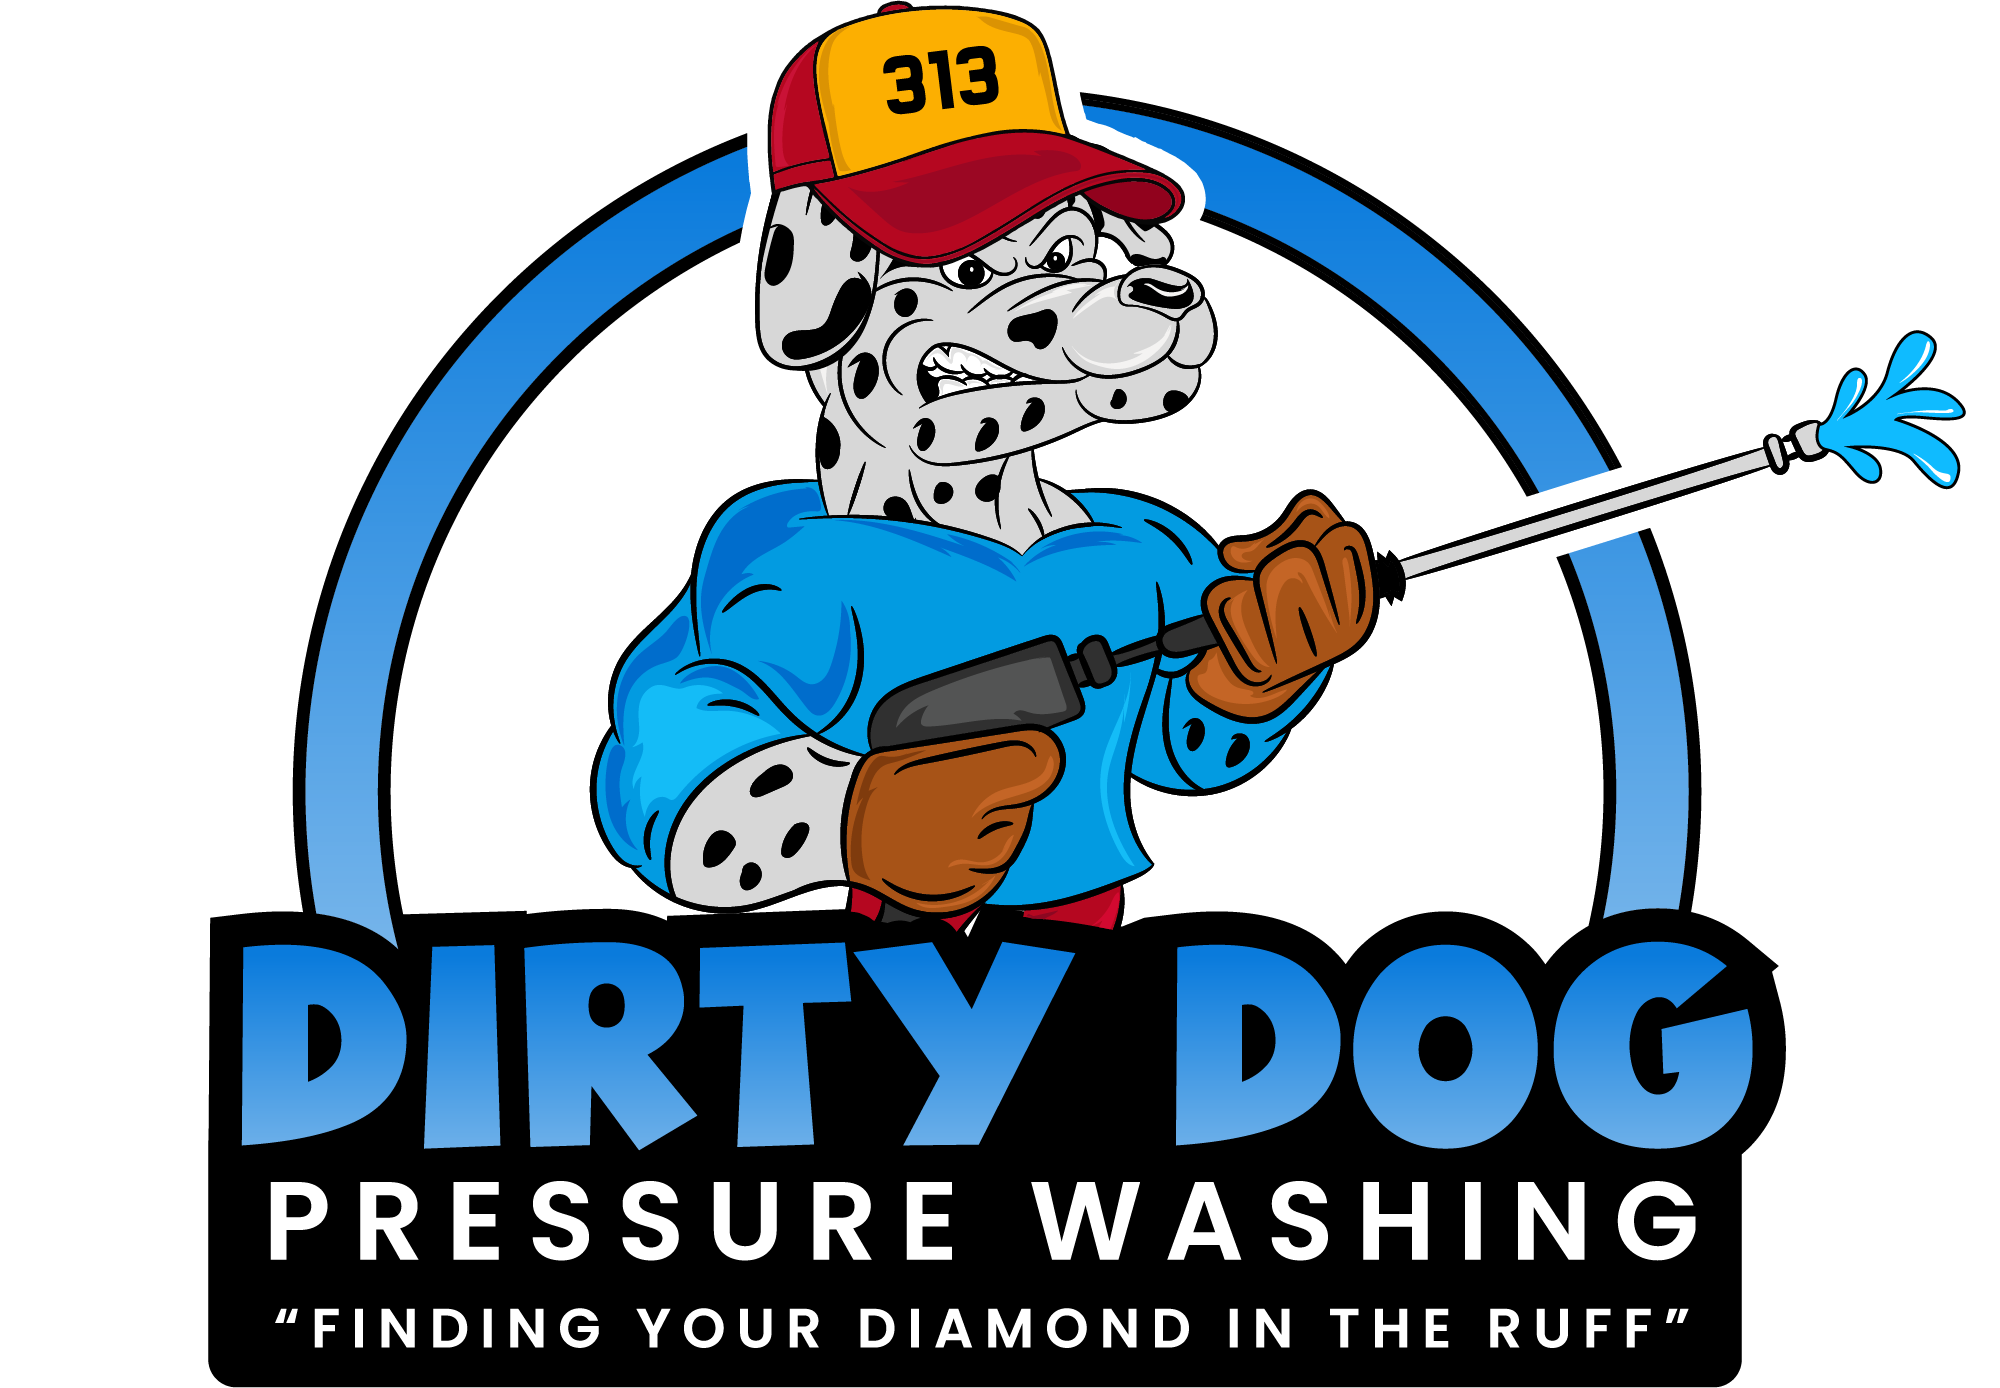 Dirty Dog Pressure Washing